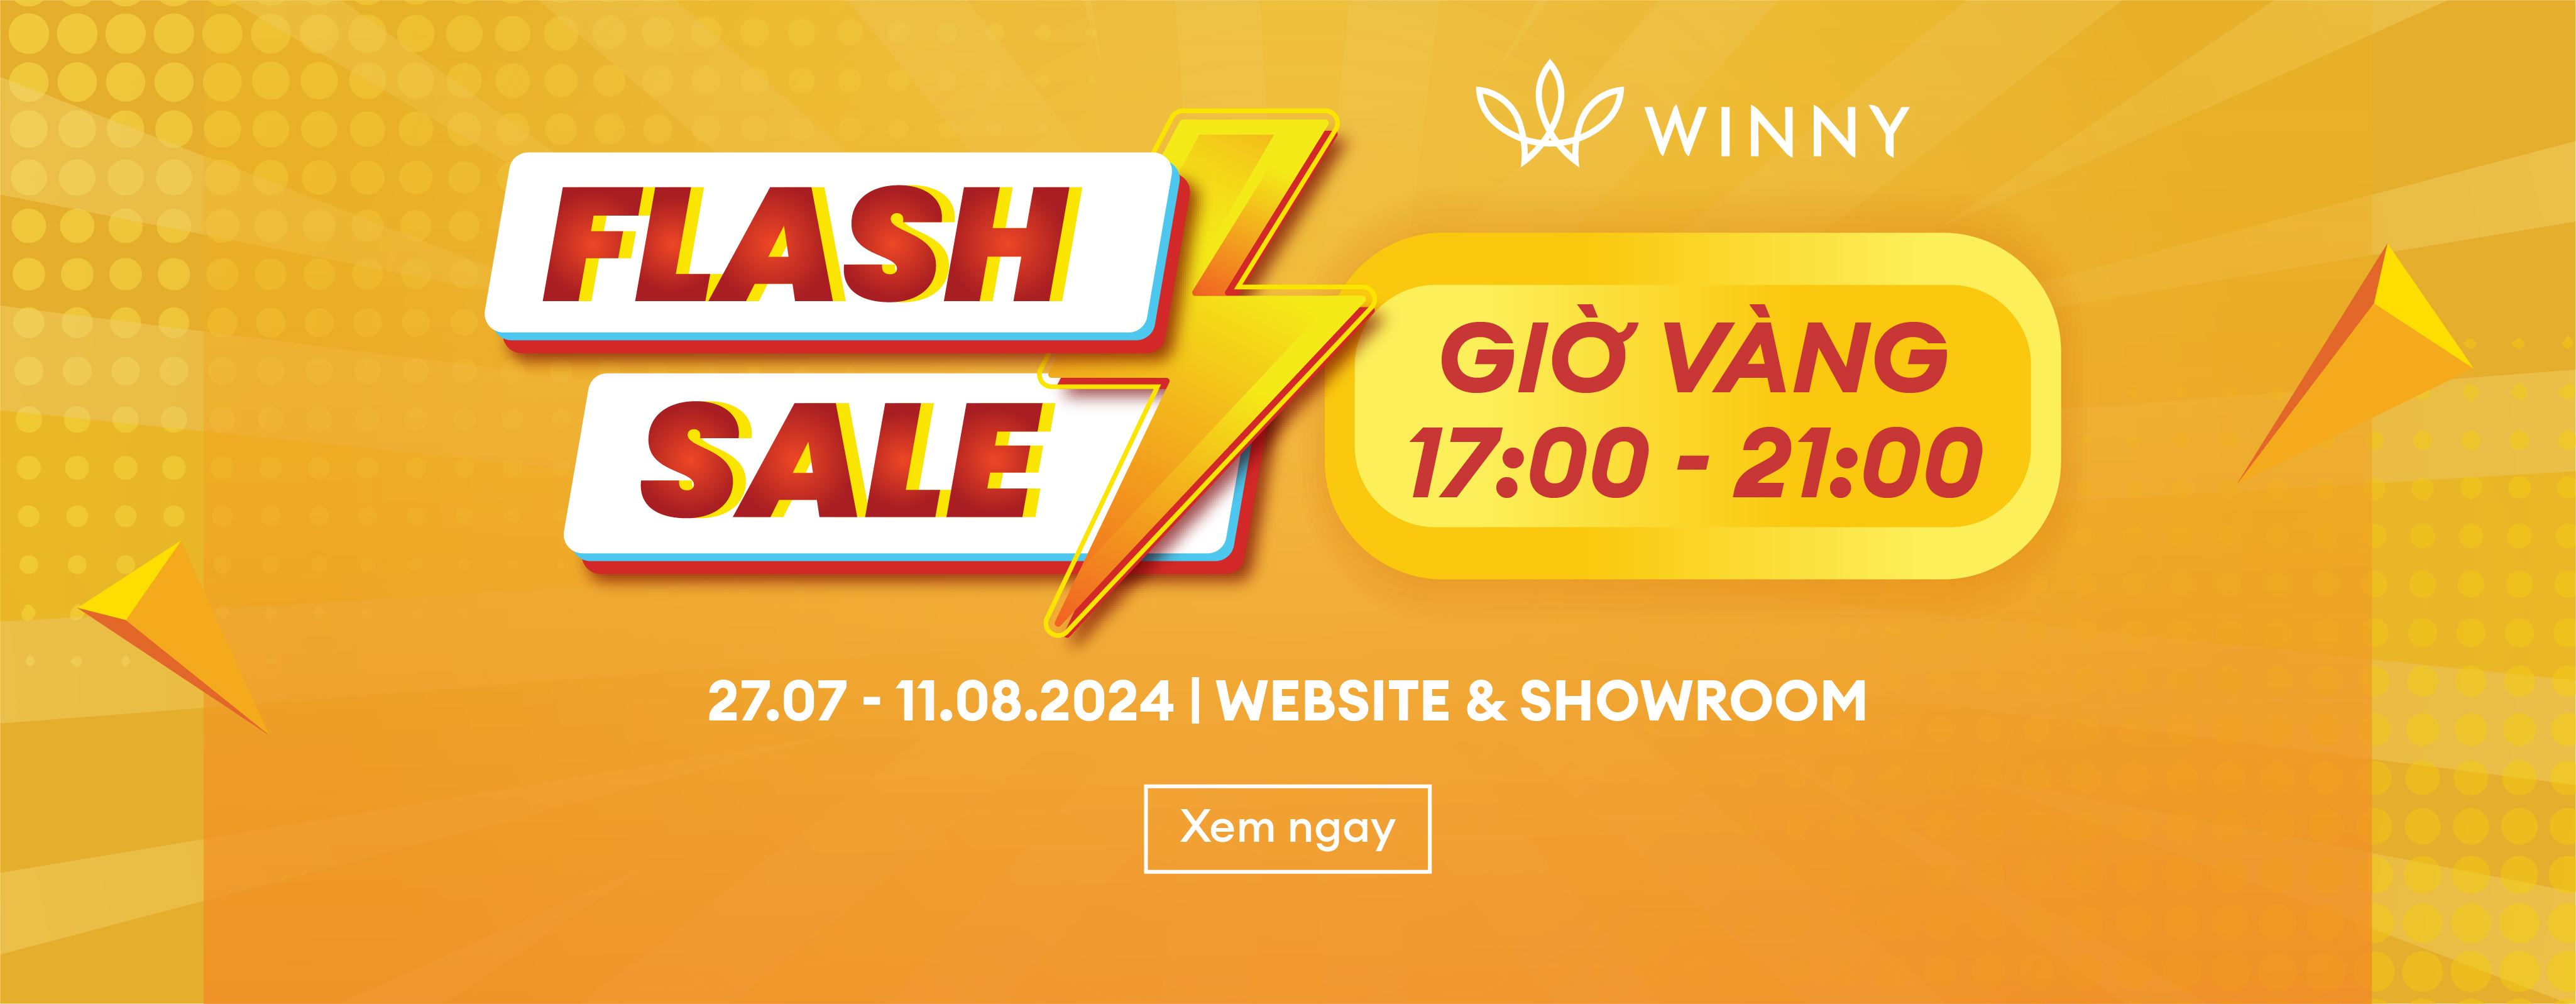 https://winny.com.vn/flash-sale/gio-vang-1.html